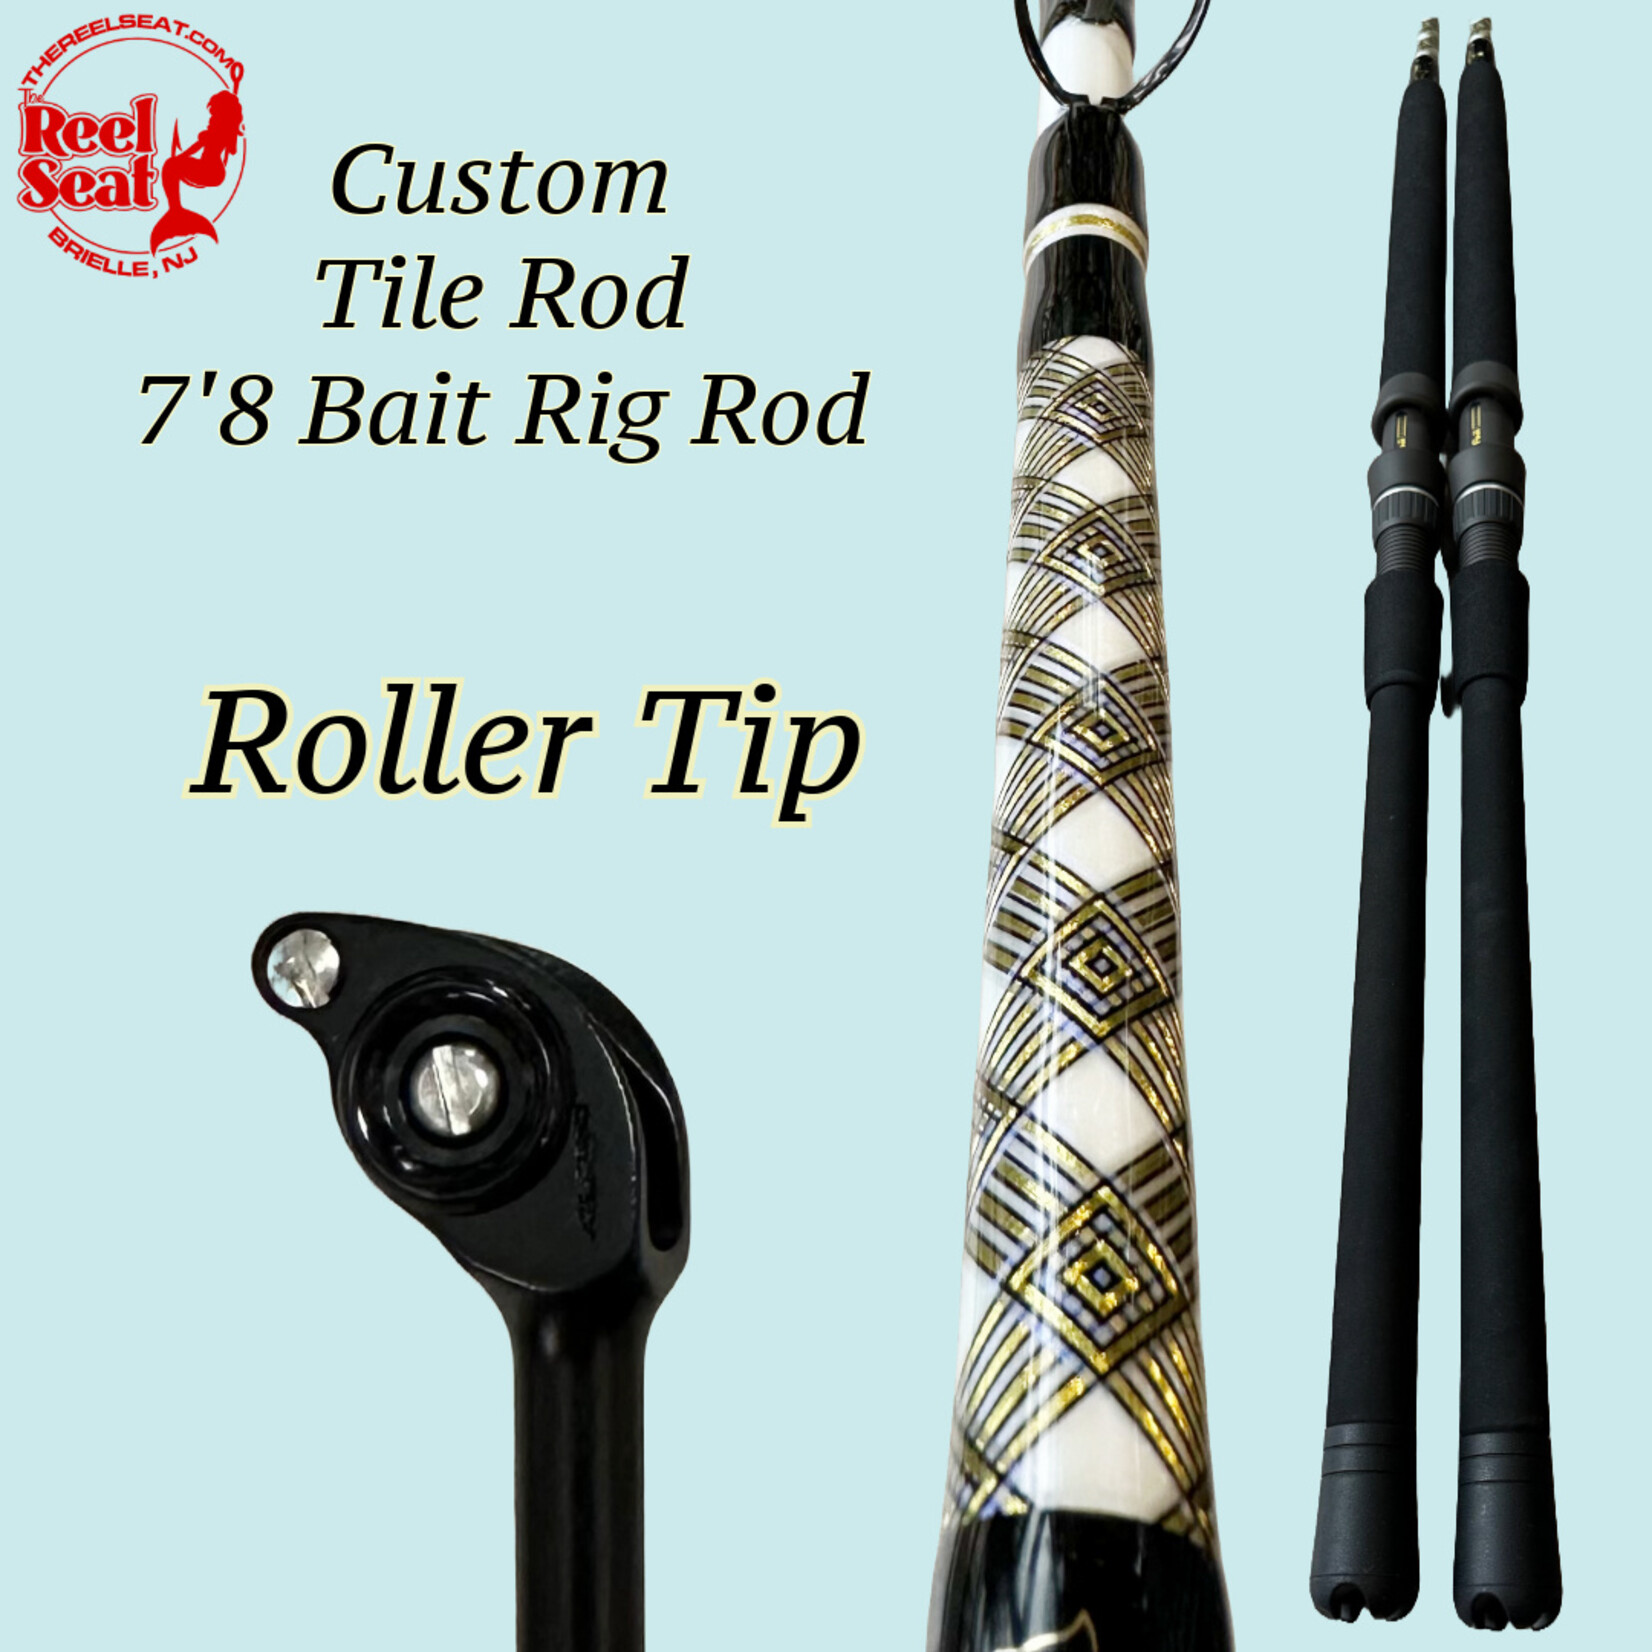 The Reel Seat RS Custom Tile Rod 7'8" "Bait Rig Rod"